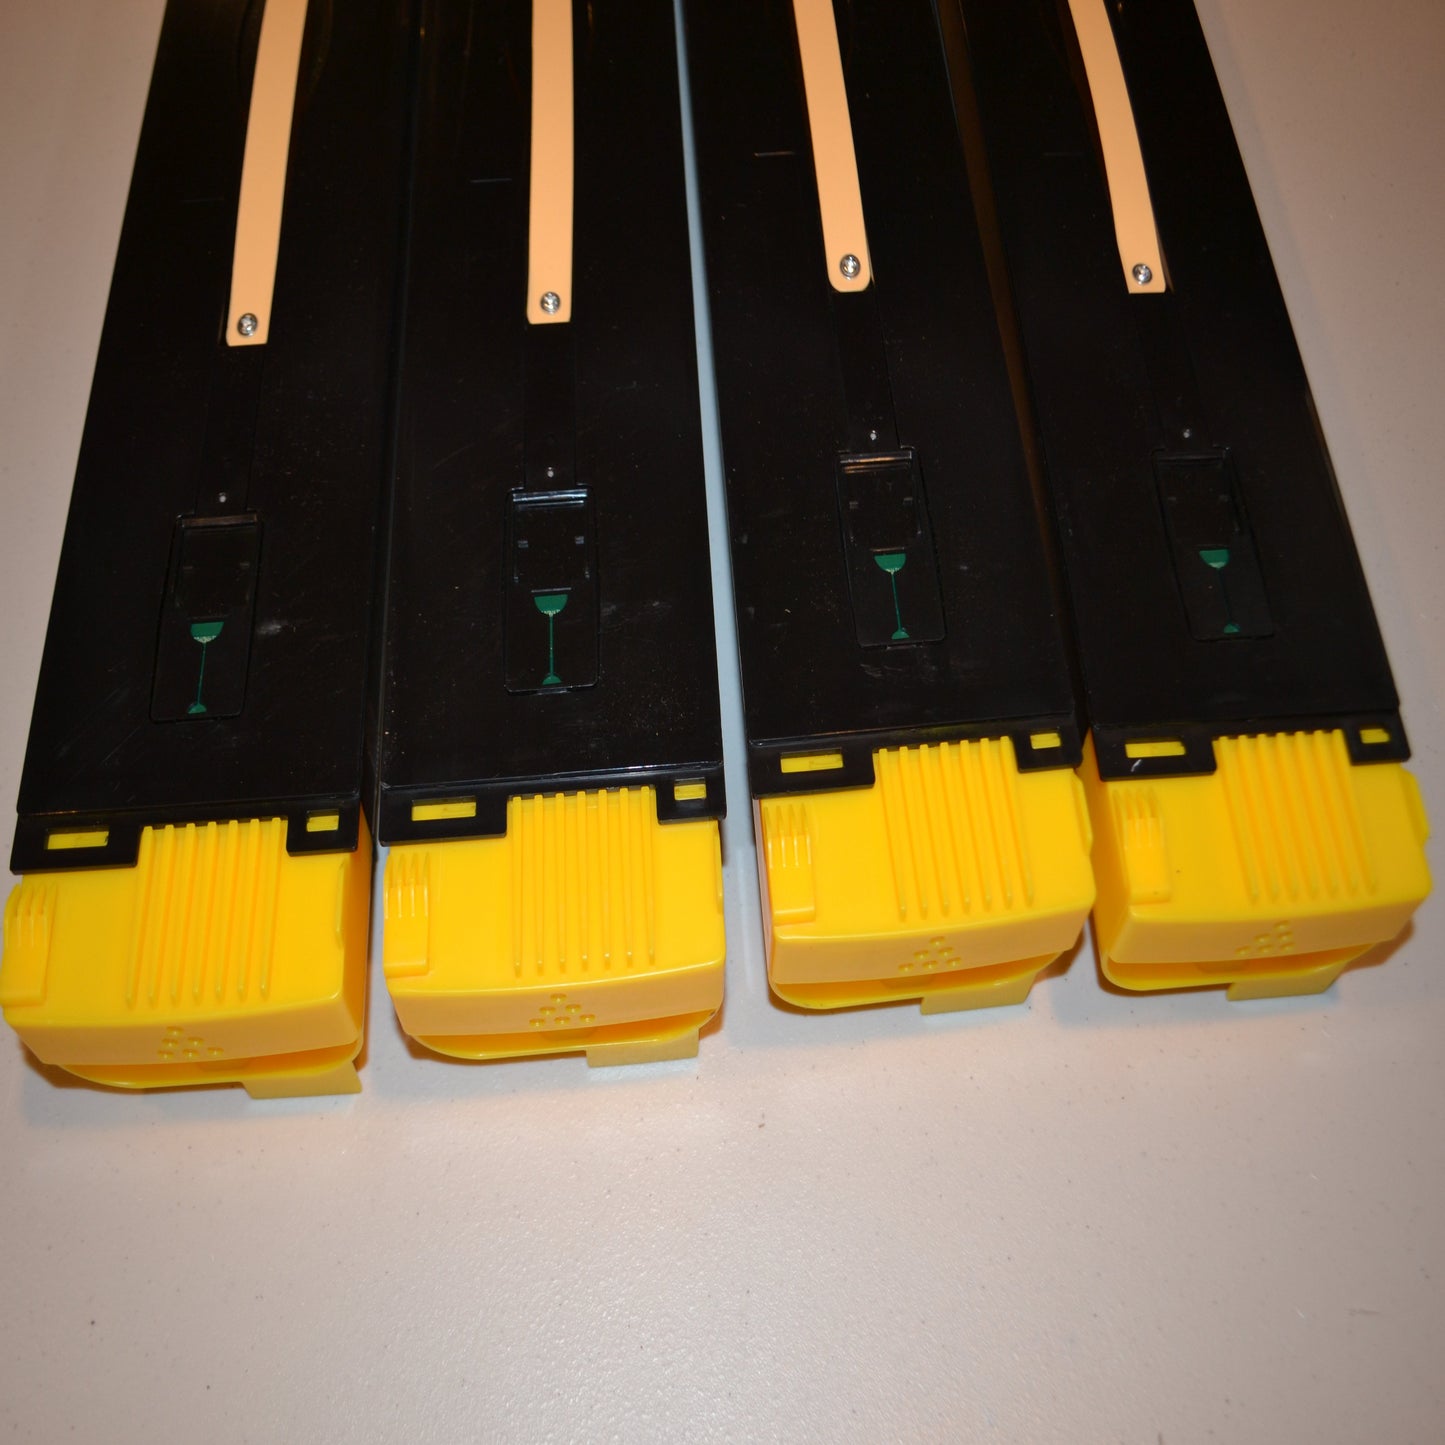 4 PACK Toner Cartridge DC250 7665 250 For Xerox Docucolor 240 242 260 YELLOW - SOP-TECHNOLOGIES, INC.